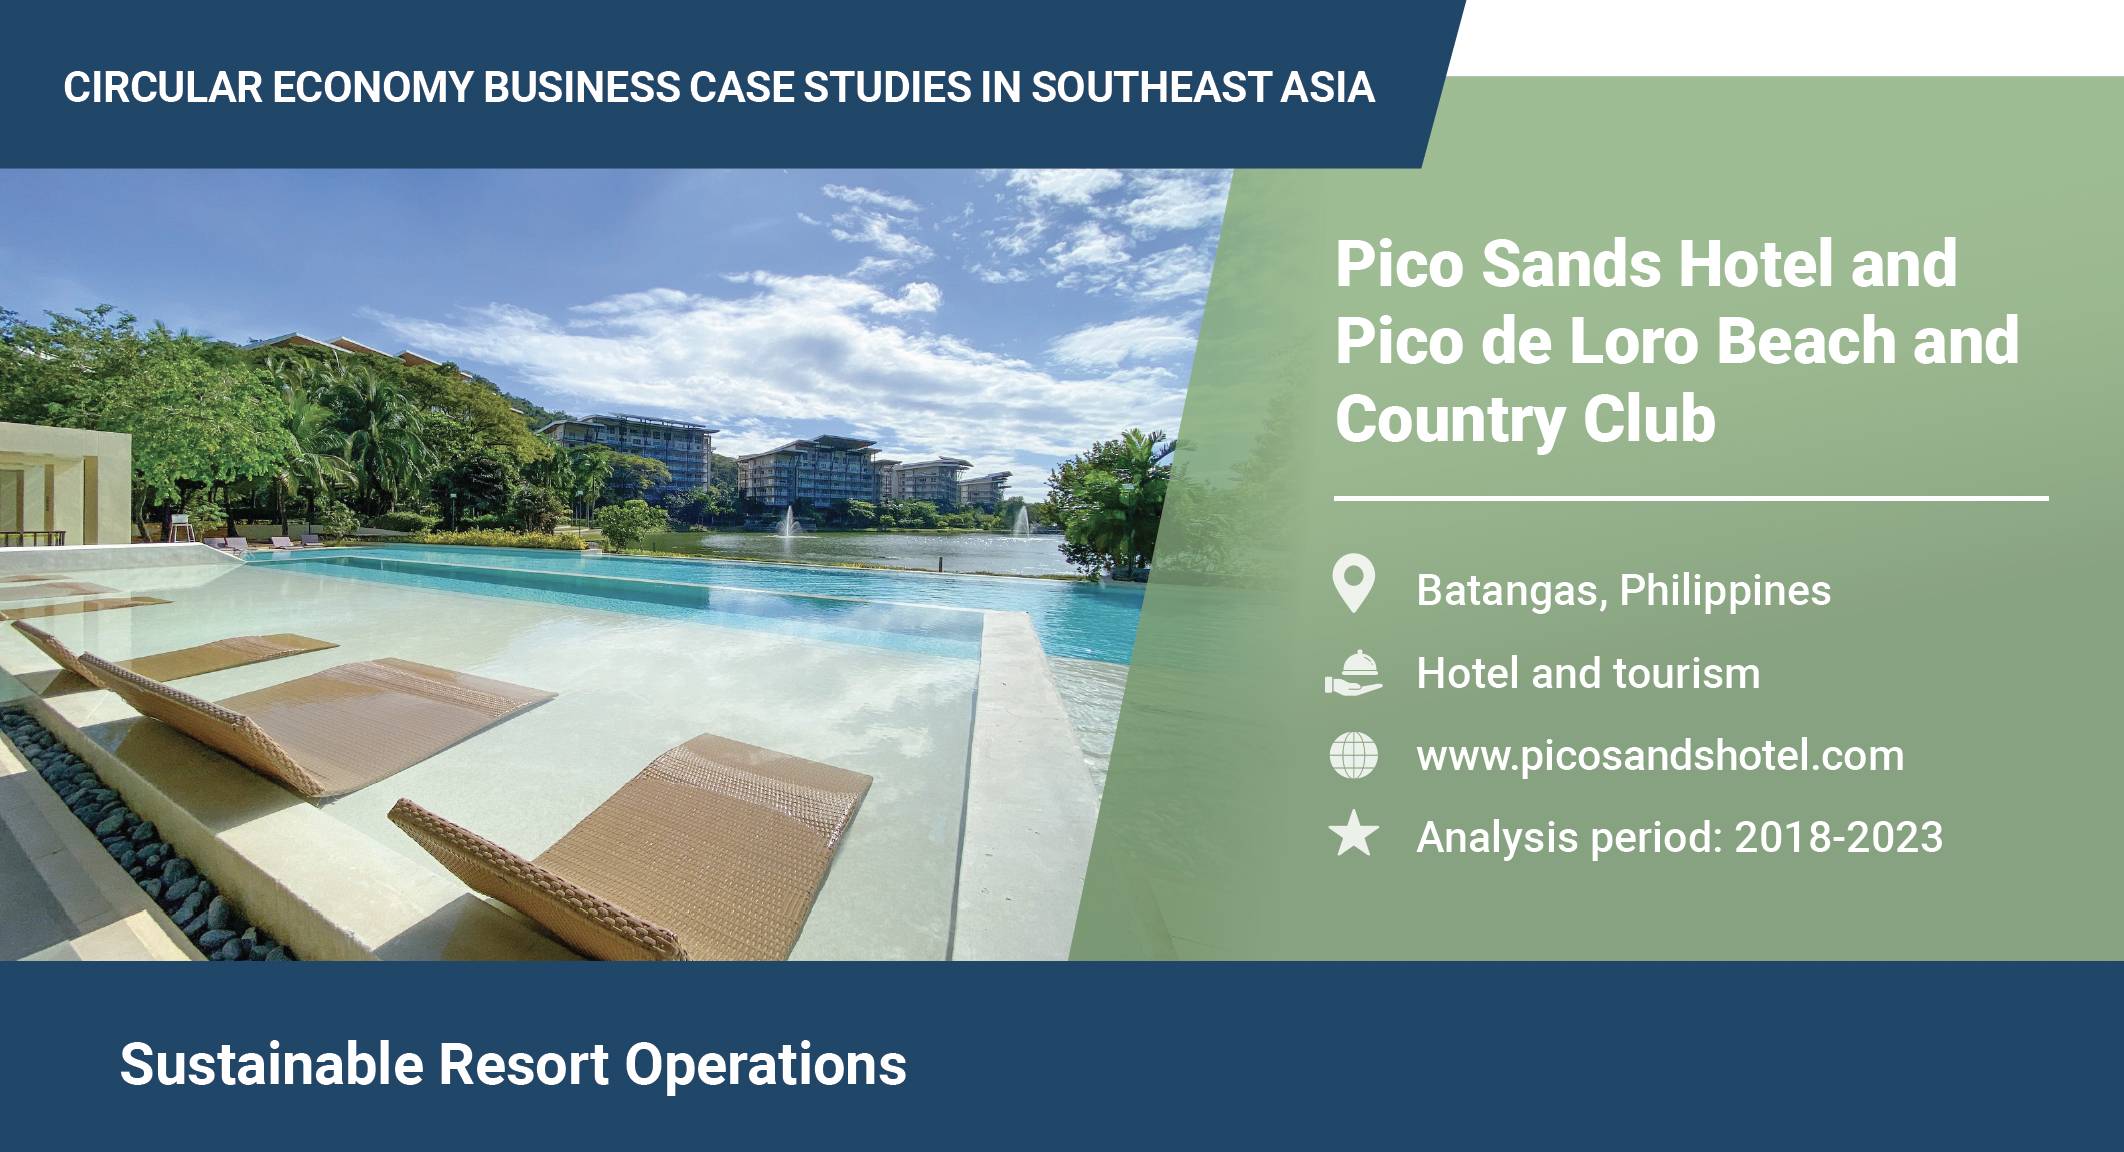 Pico Sands Hotel and Pico de Loro Beach and Country Club4147